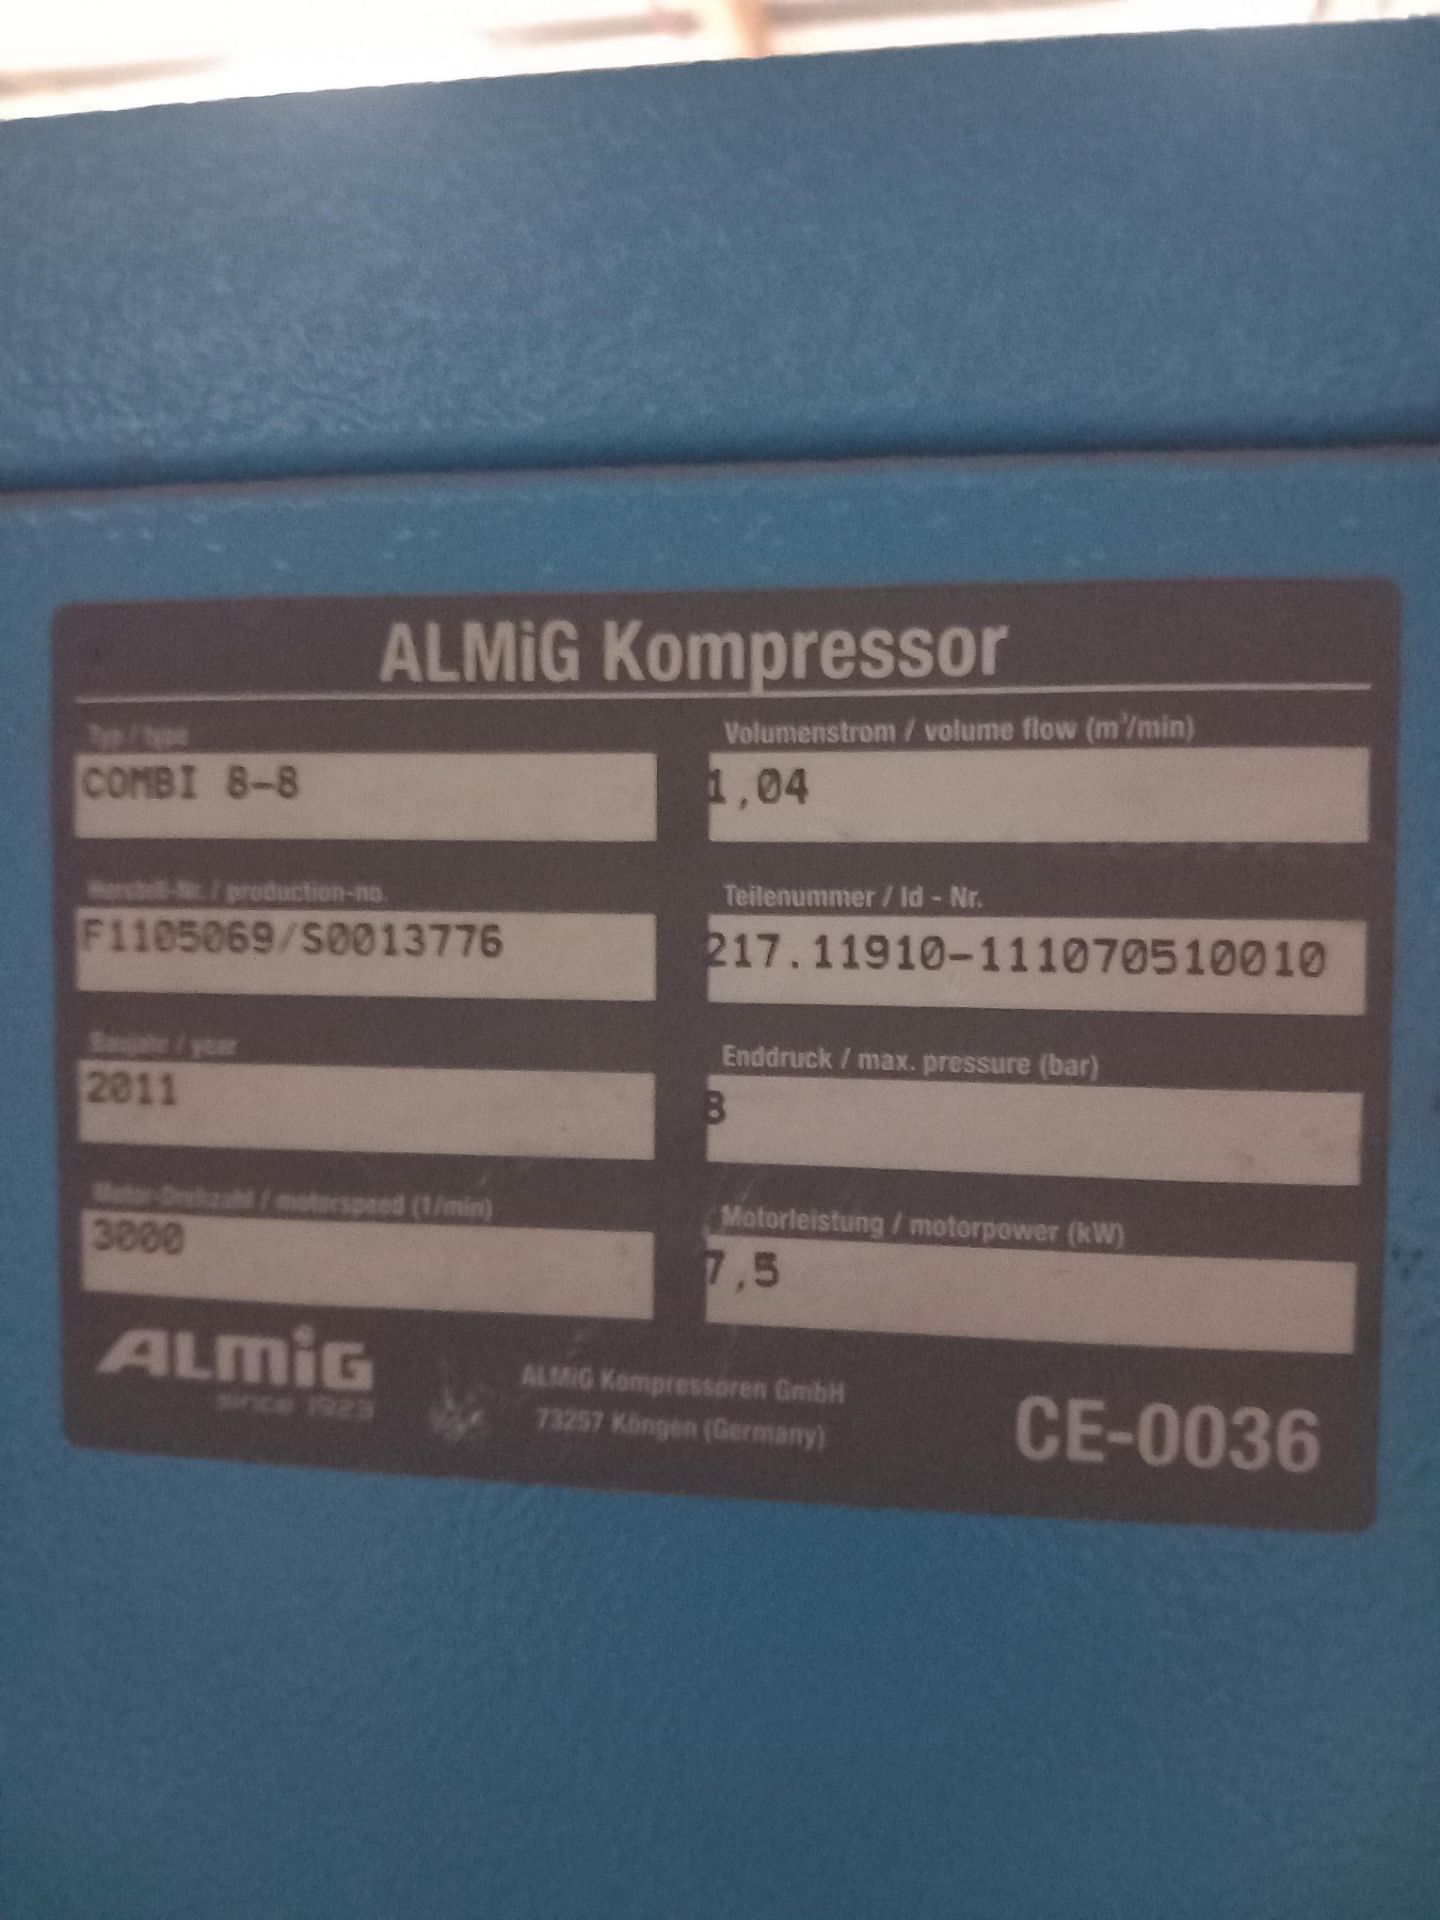 Almig Combi 8.8 Compressor (2011) - Image 3 of 3